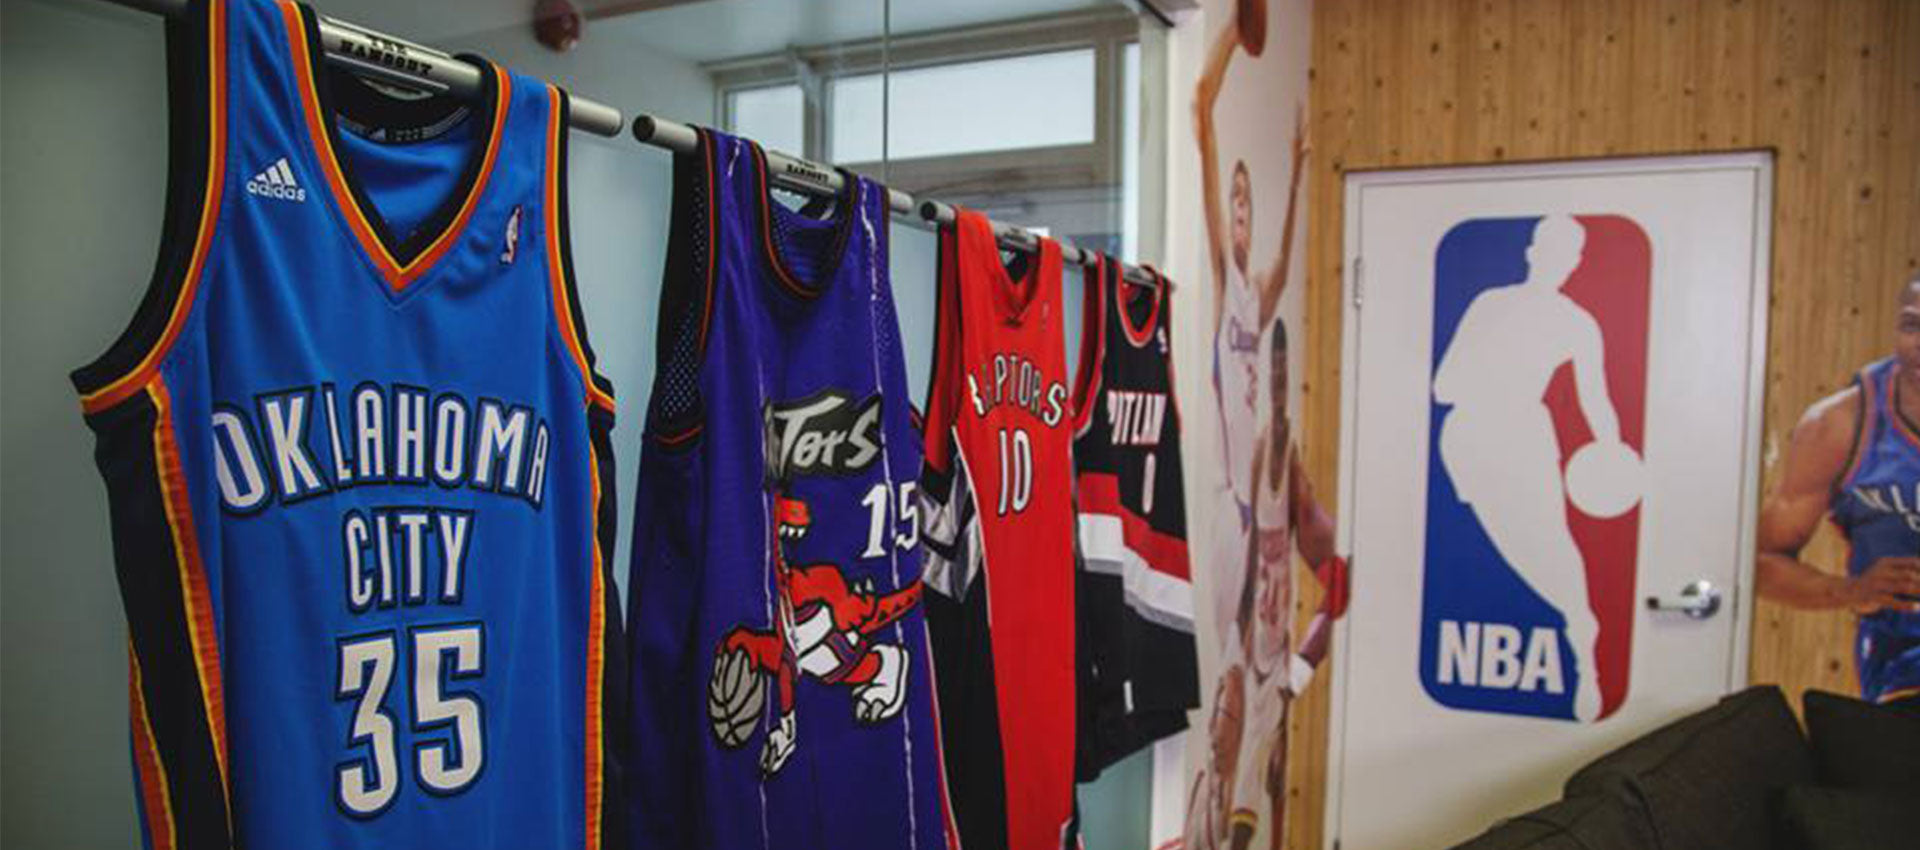 display jerseys on wall